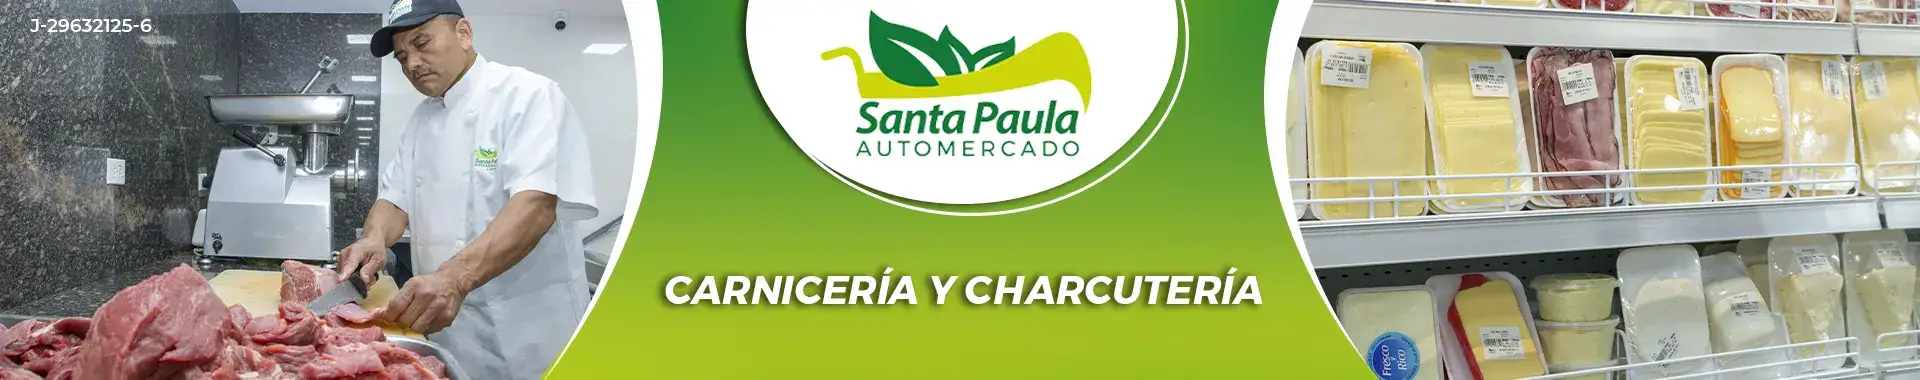 Imagen 2 del perfil de Automercado Santa Paula